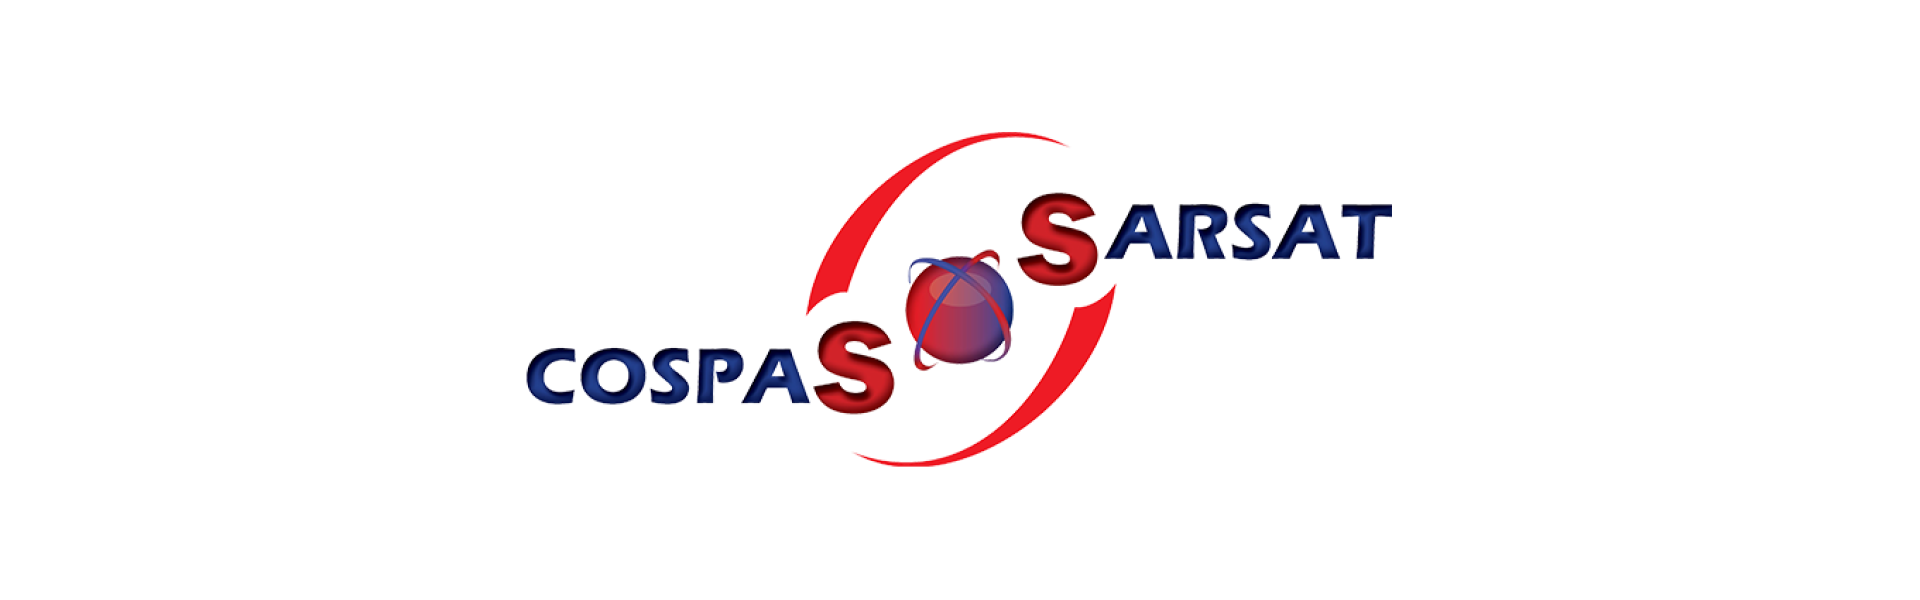 COSPAS-SARSAT